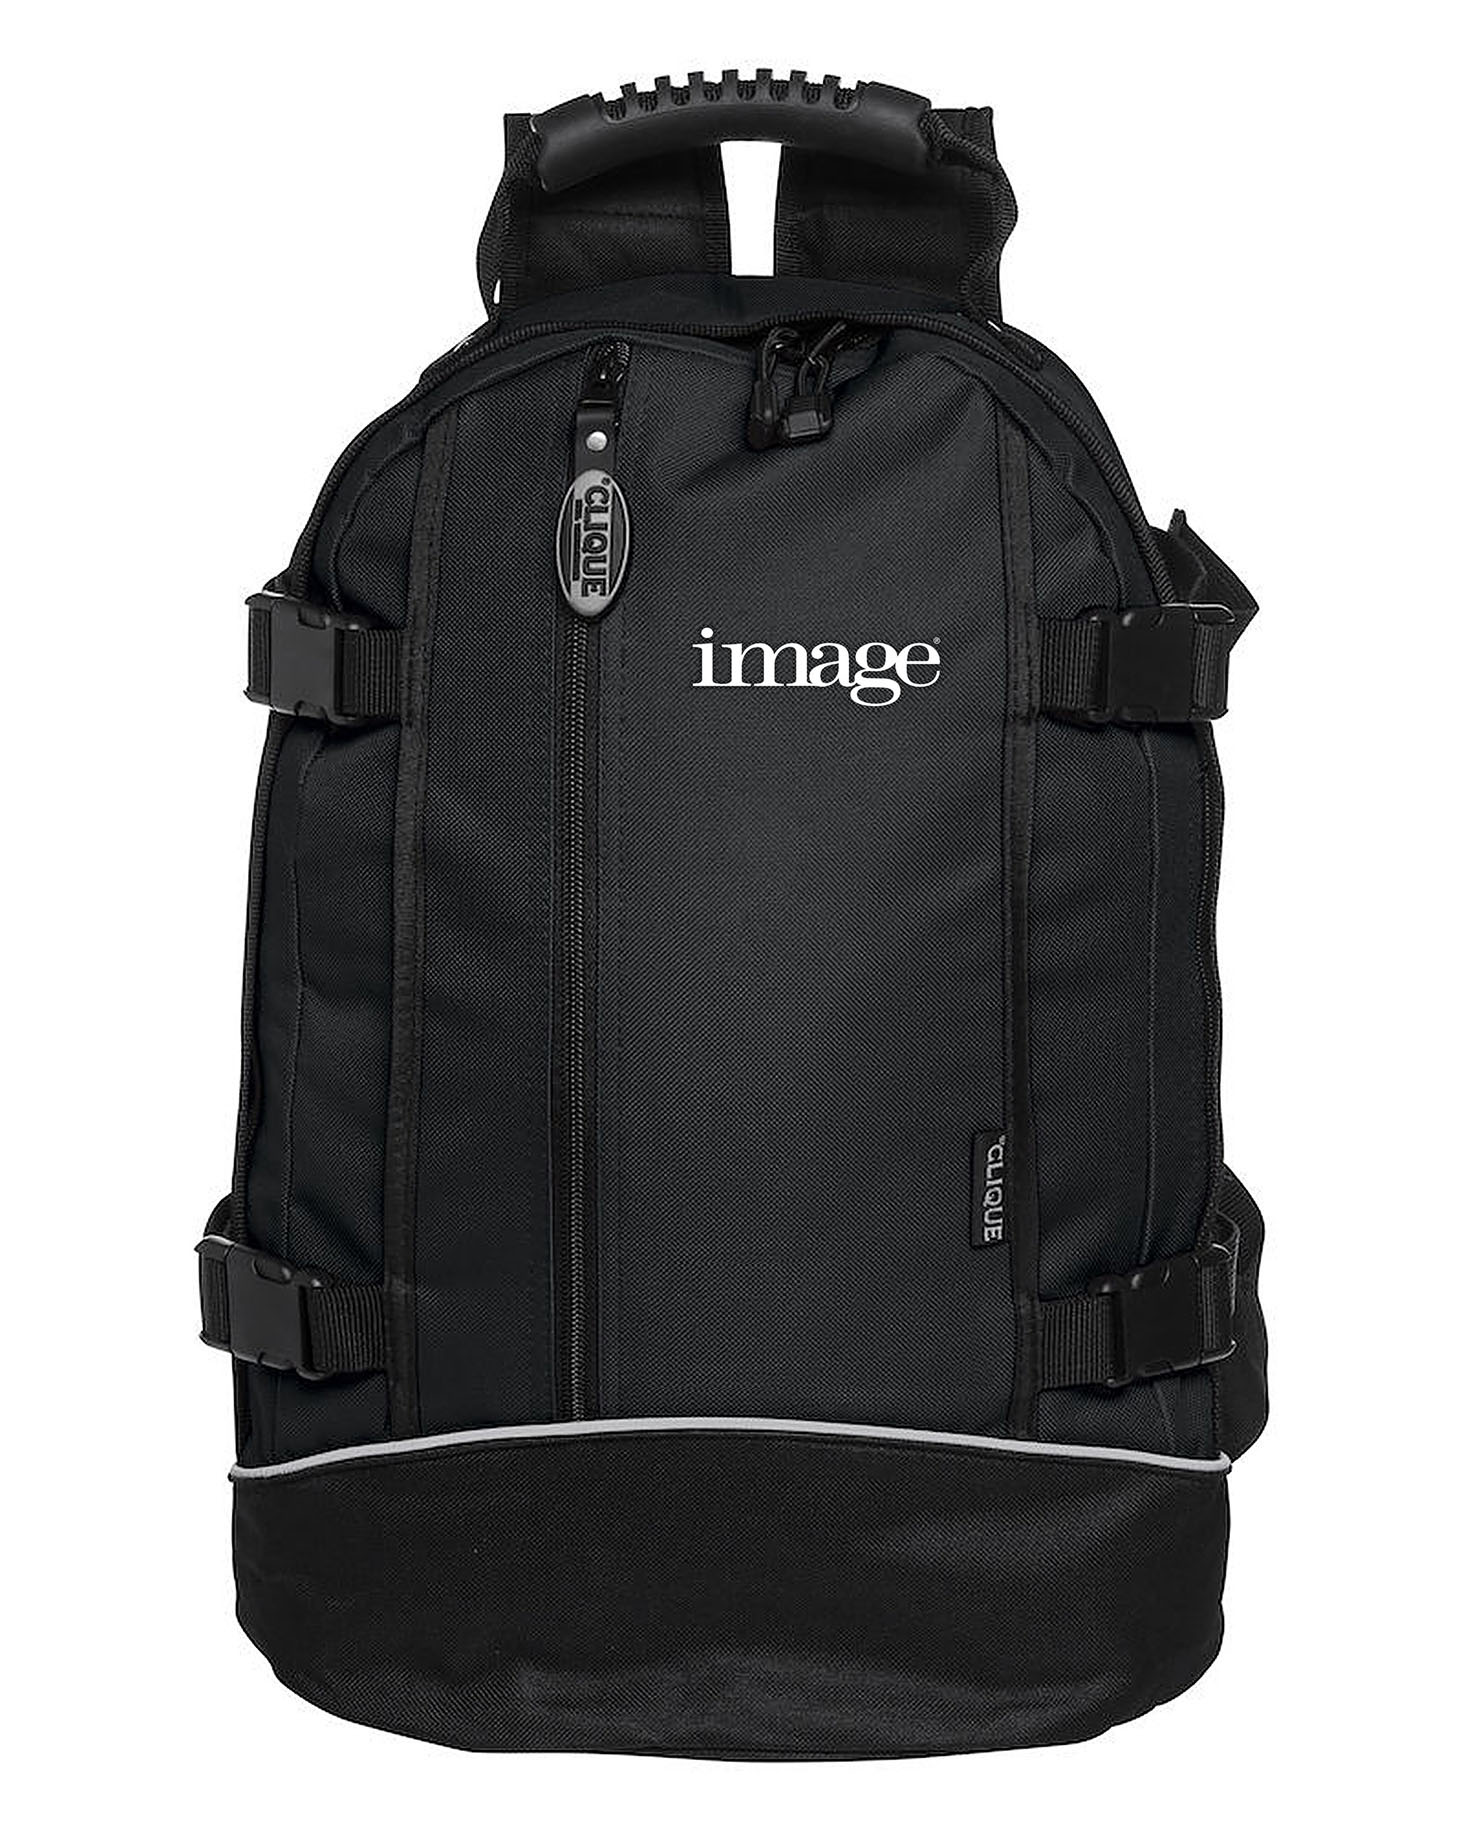 Image Backpack